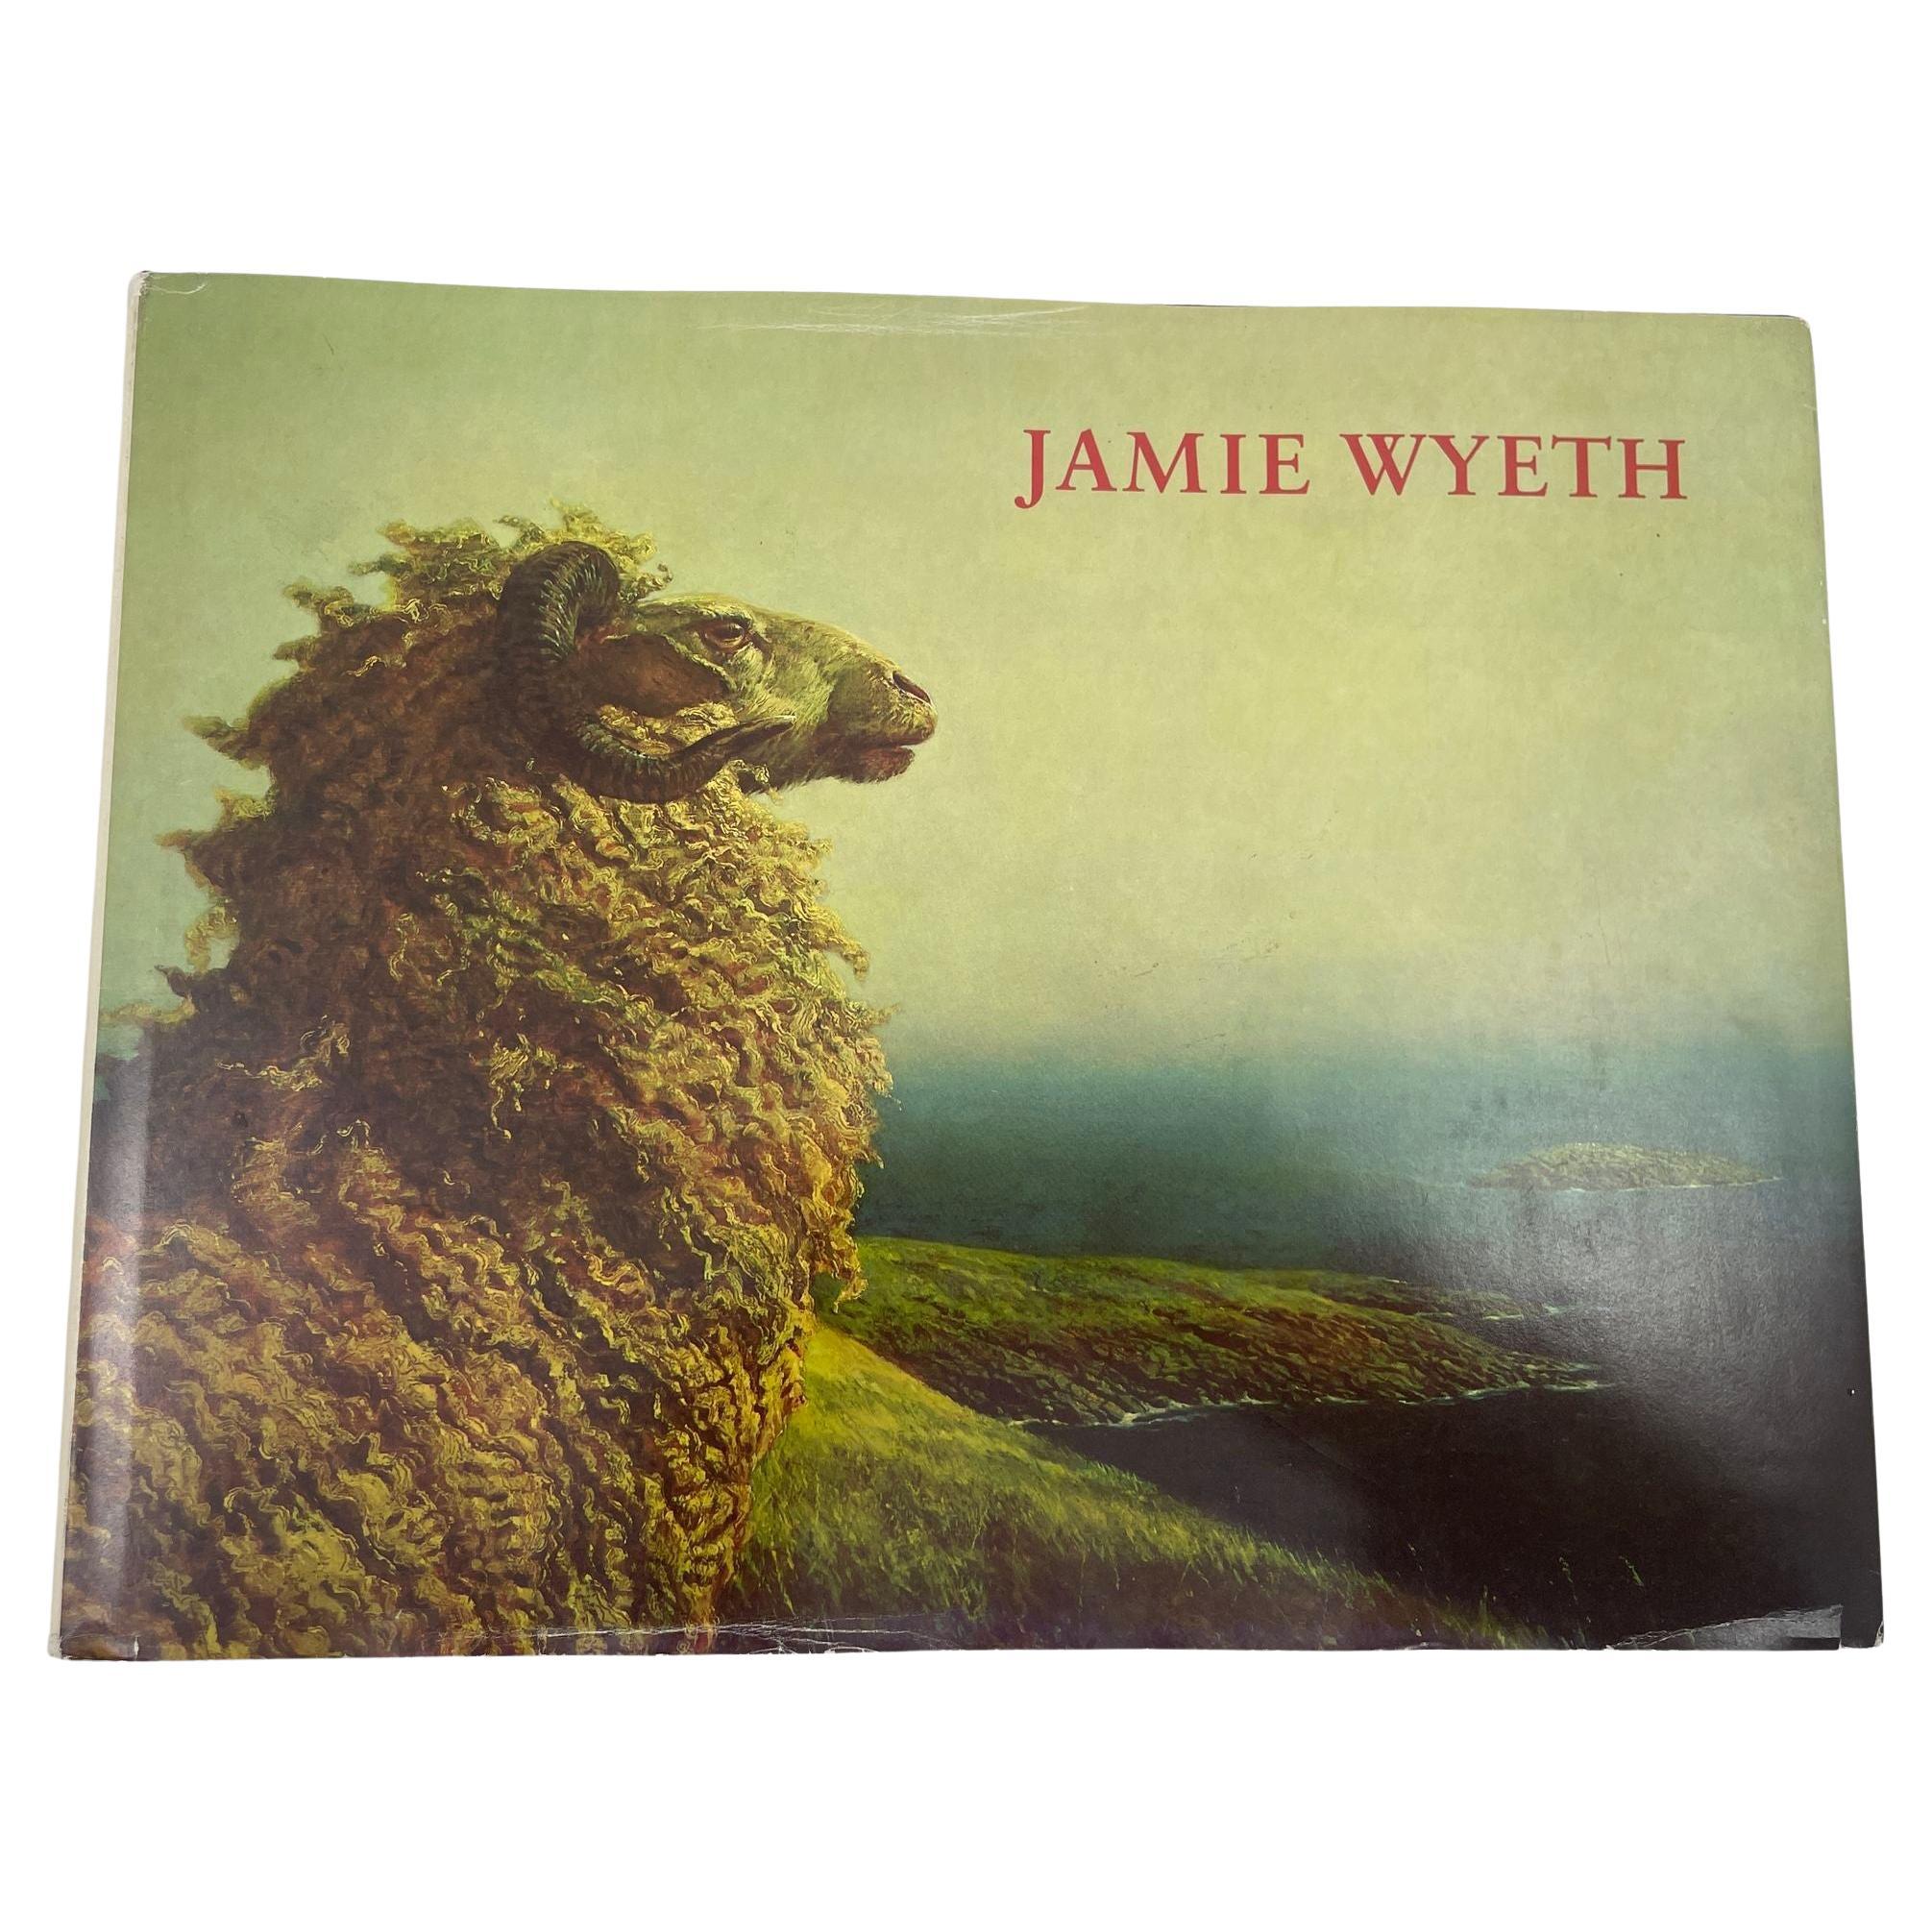 Jamie Wyeth by Jamie Wyeth Hardcover Book 1980 1st Ed. For Sale